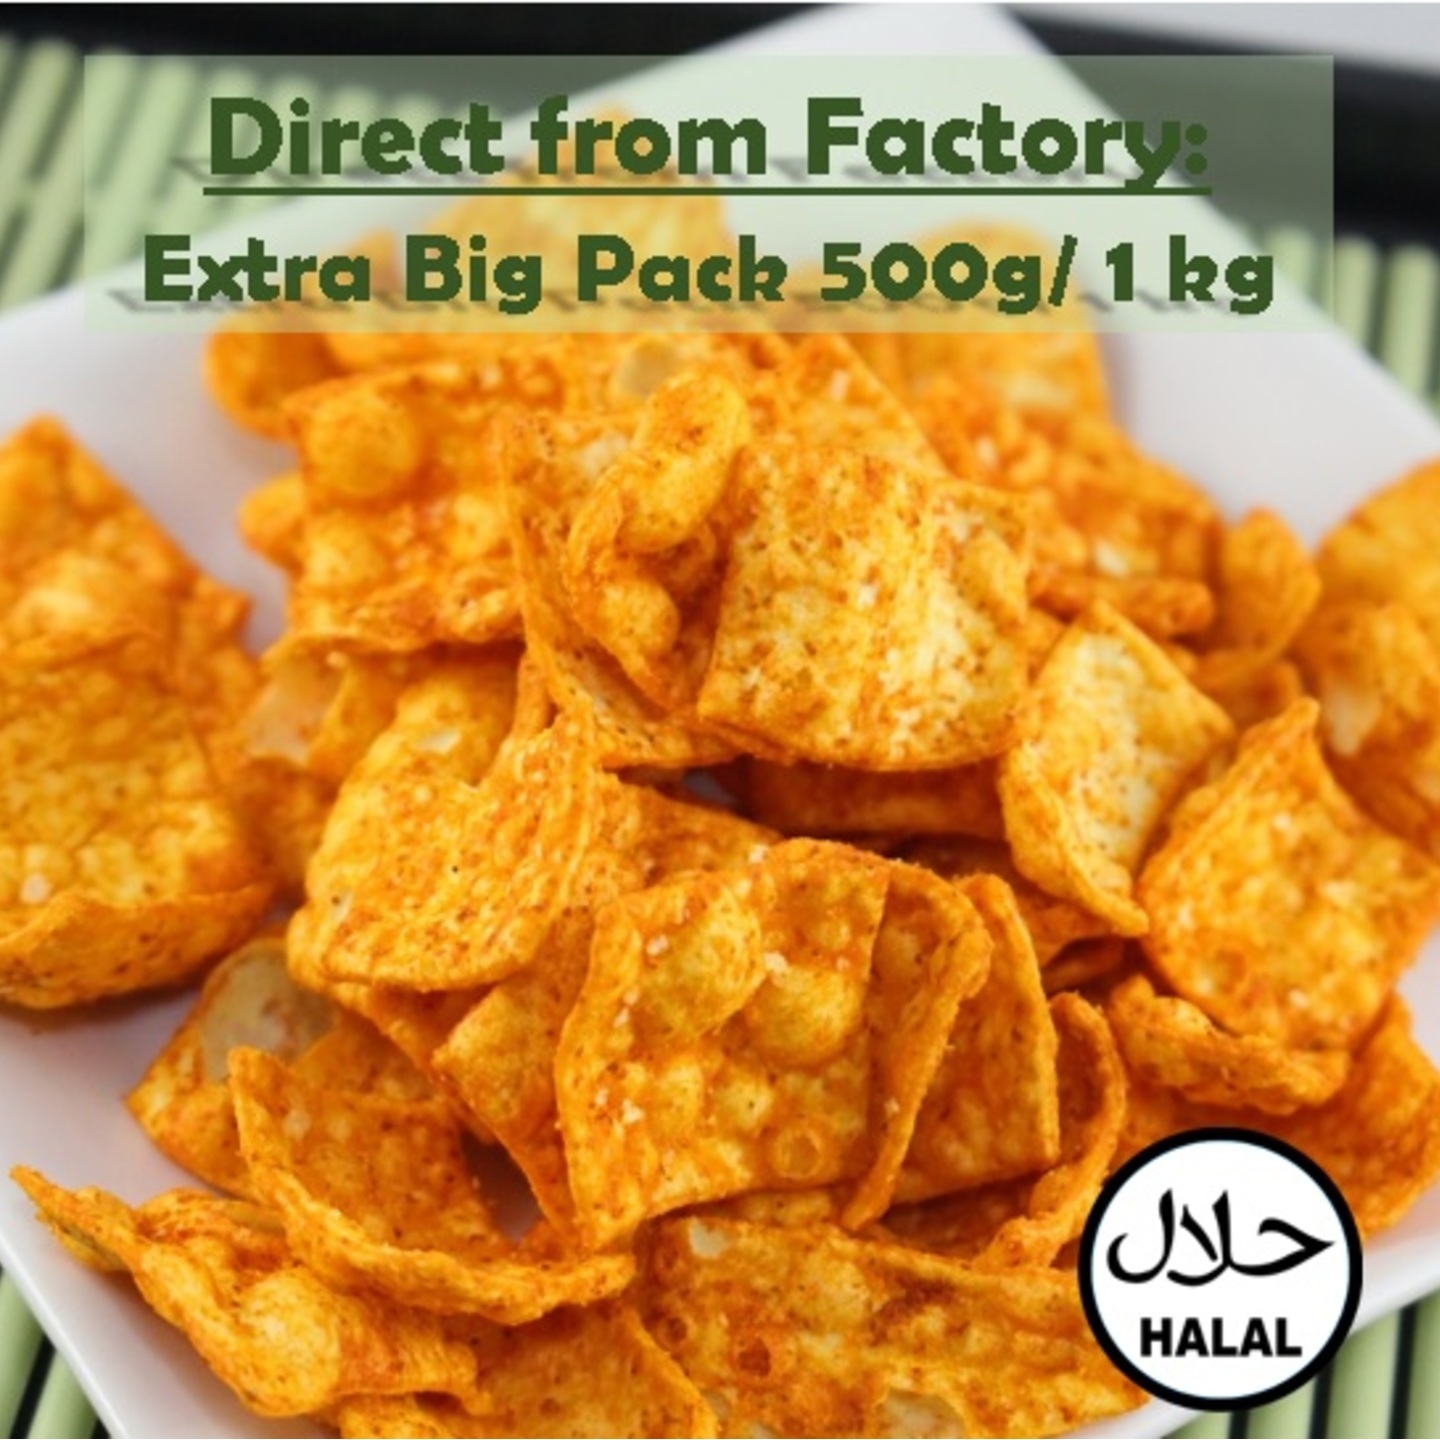 Extra Spicy Tapioca Square - 500g 1 kg Pack